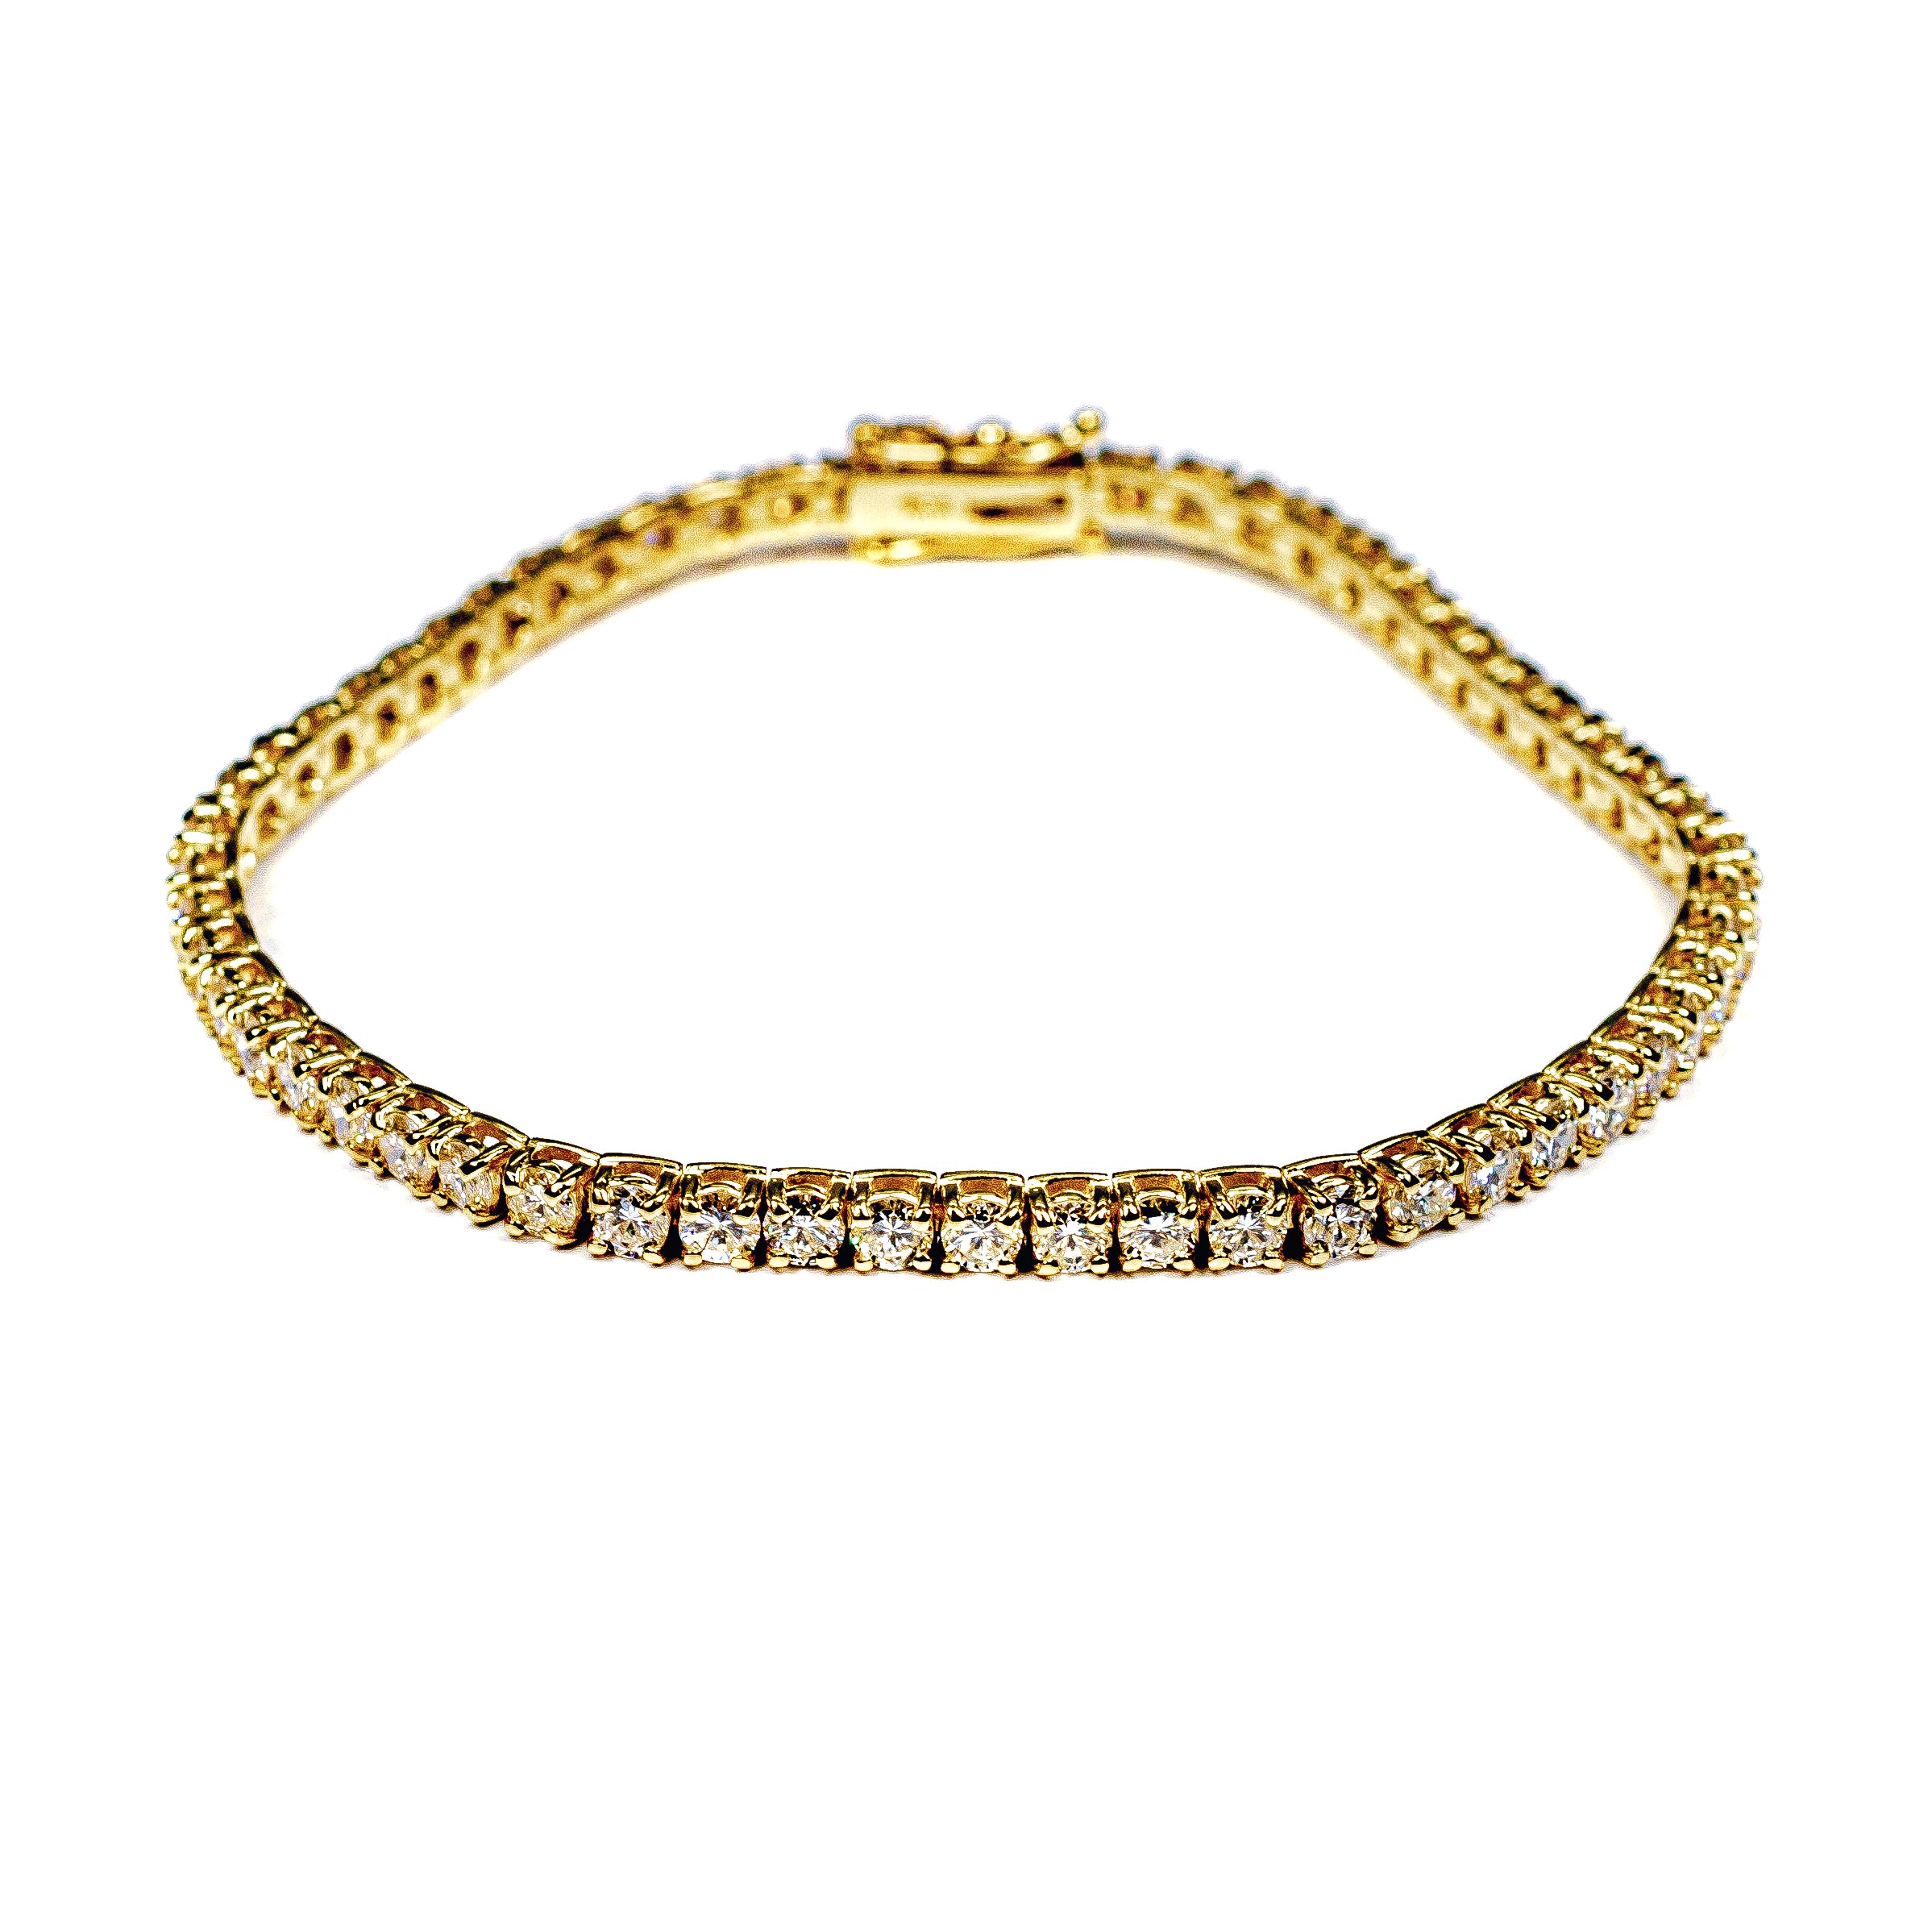 18kt Yellow Gold 5ct Diamond Tennis Bracelet